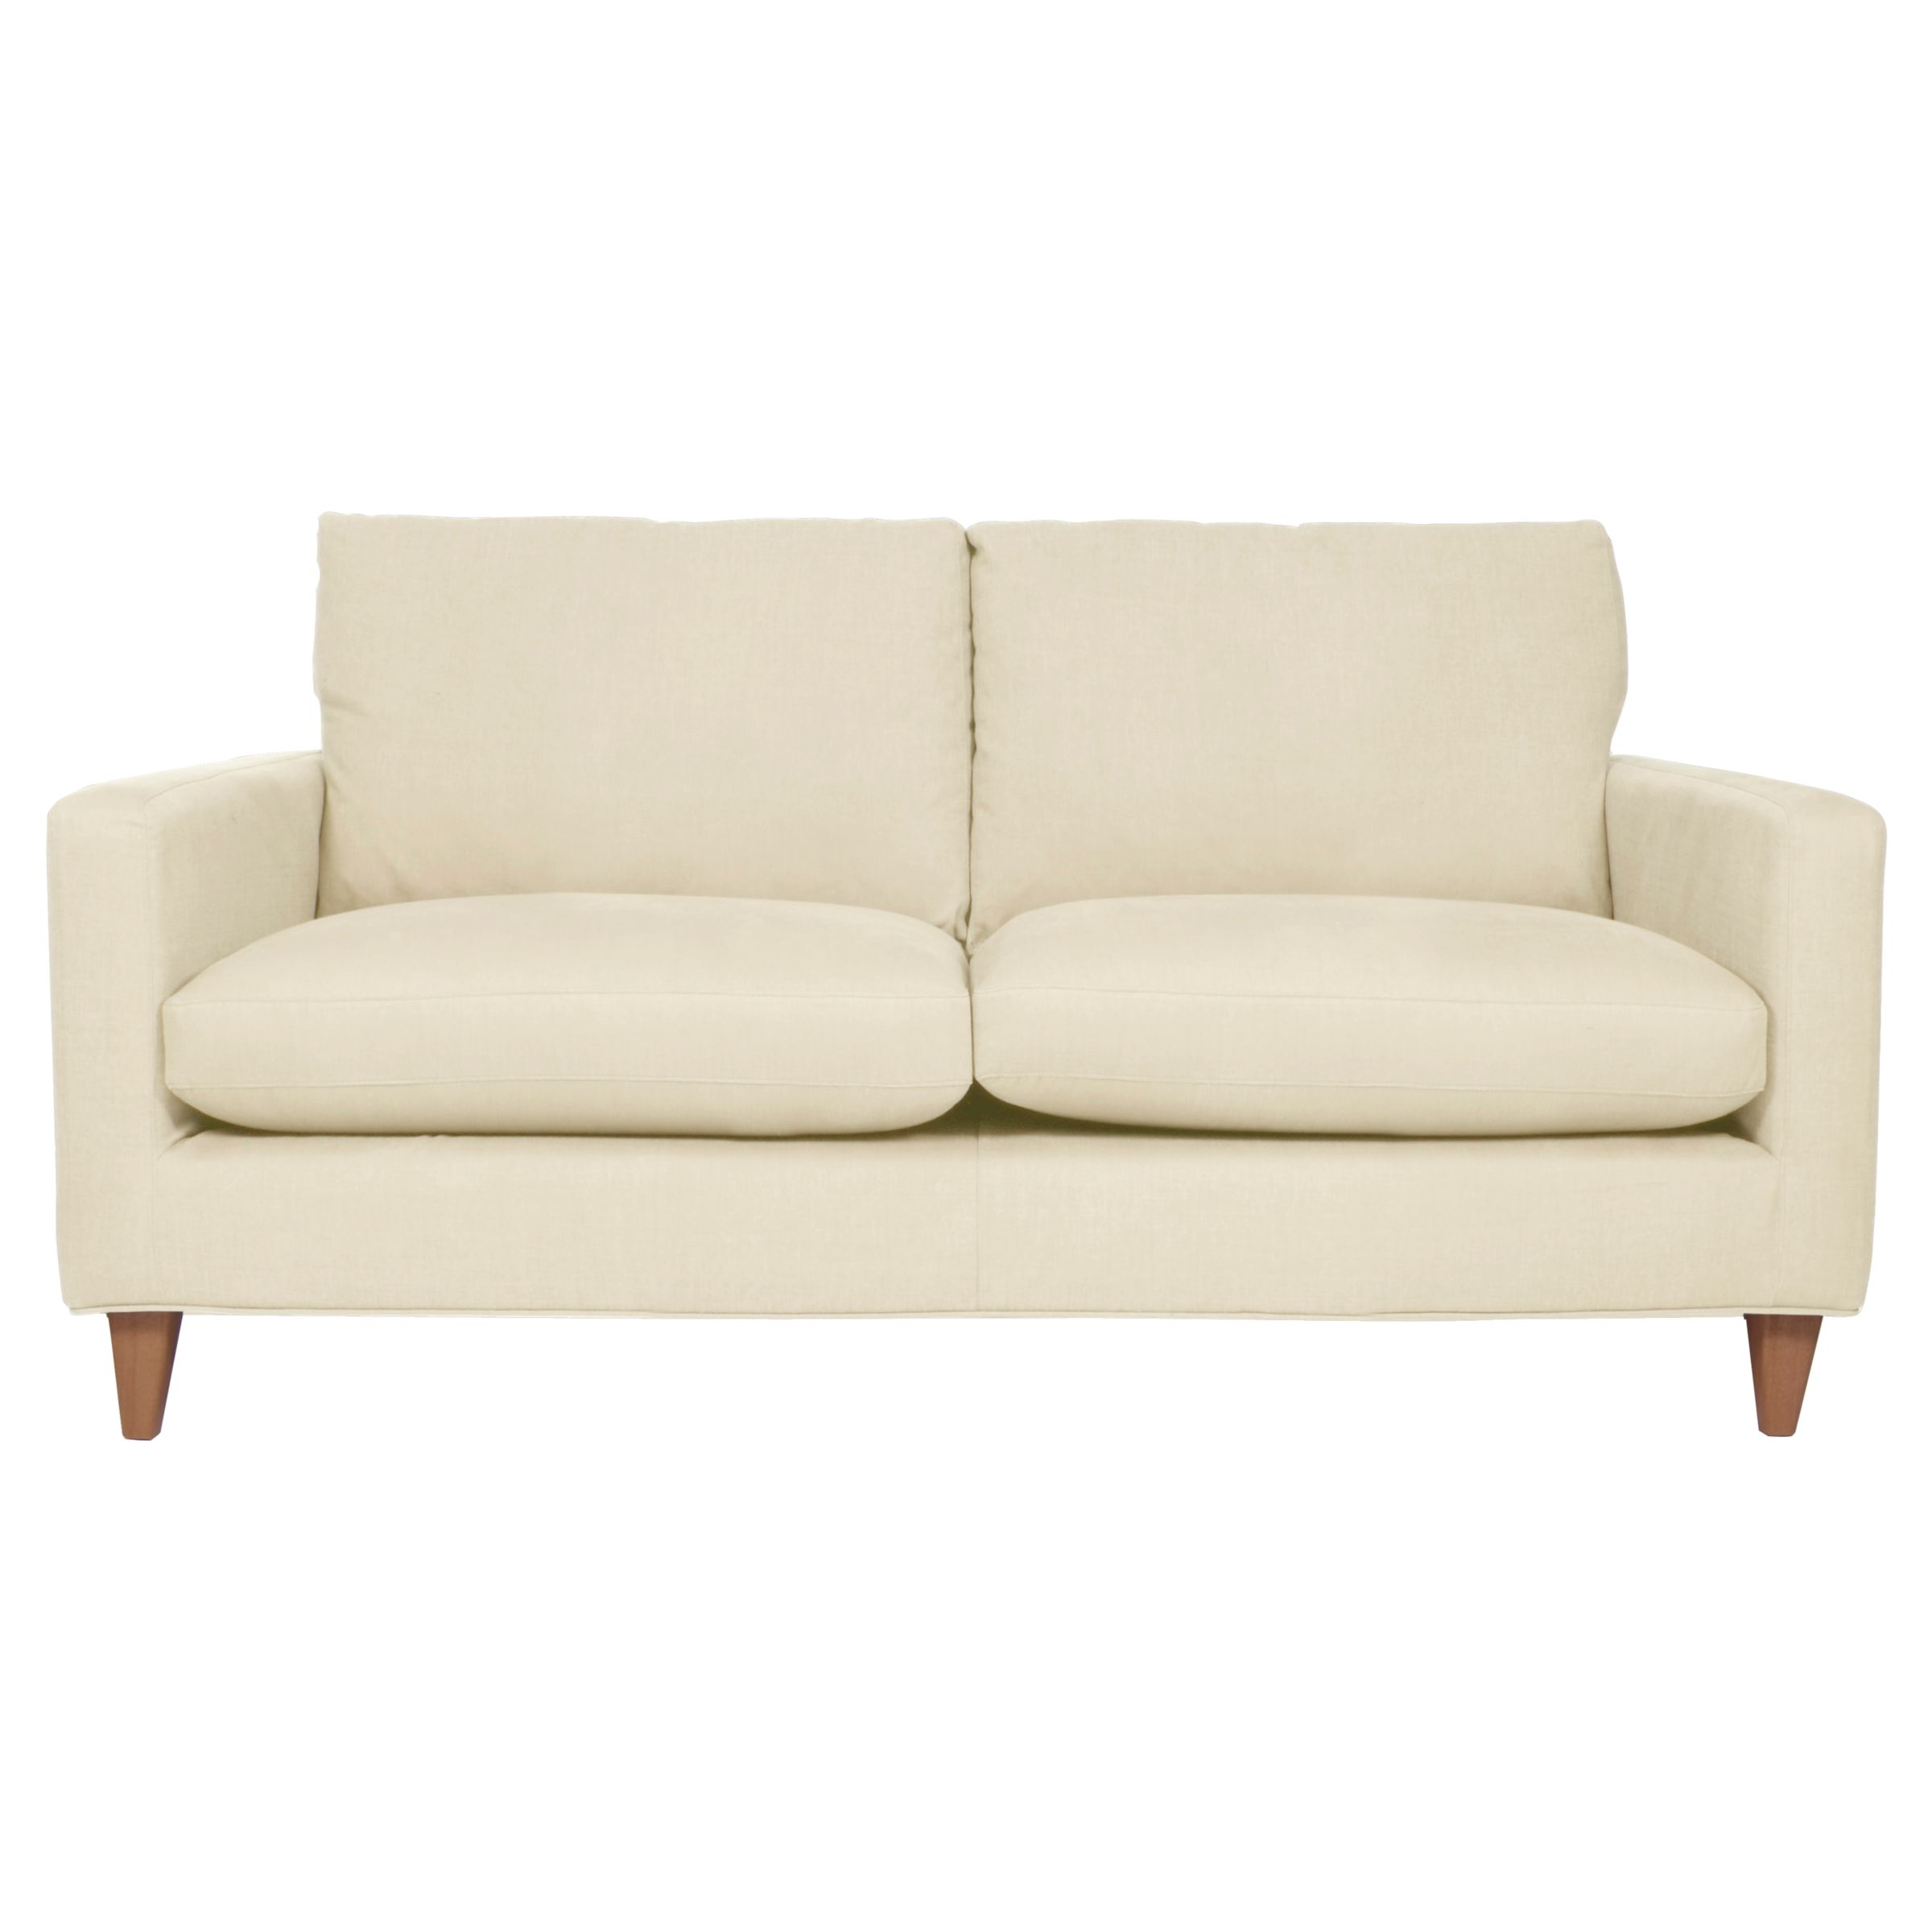 John Lewis Bailey Medium Sofa, Oban Natural, width 175cm